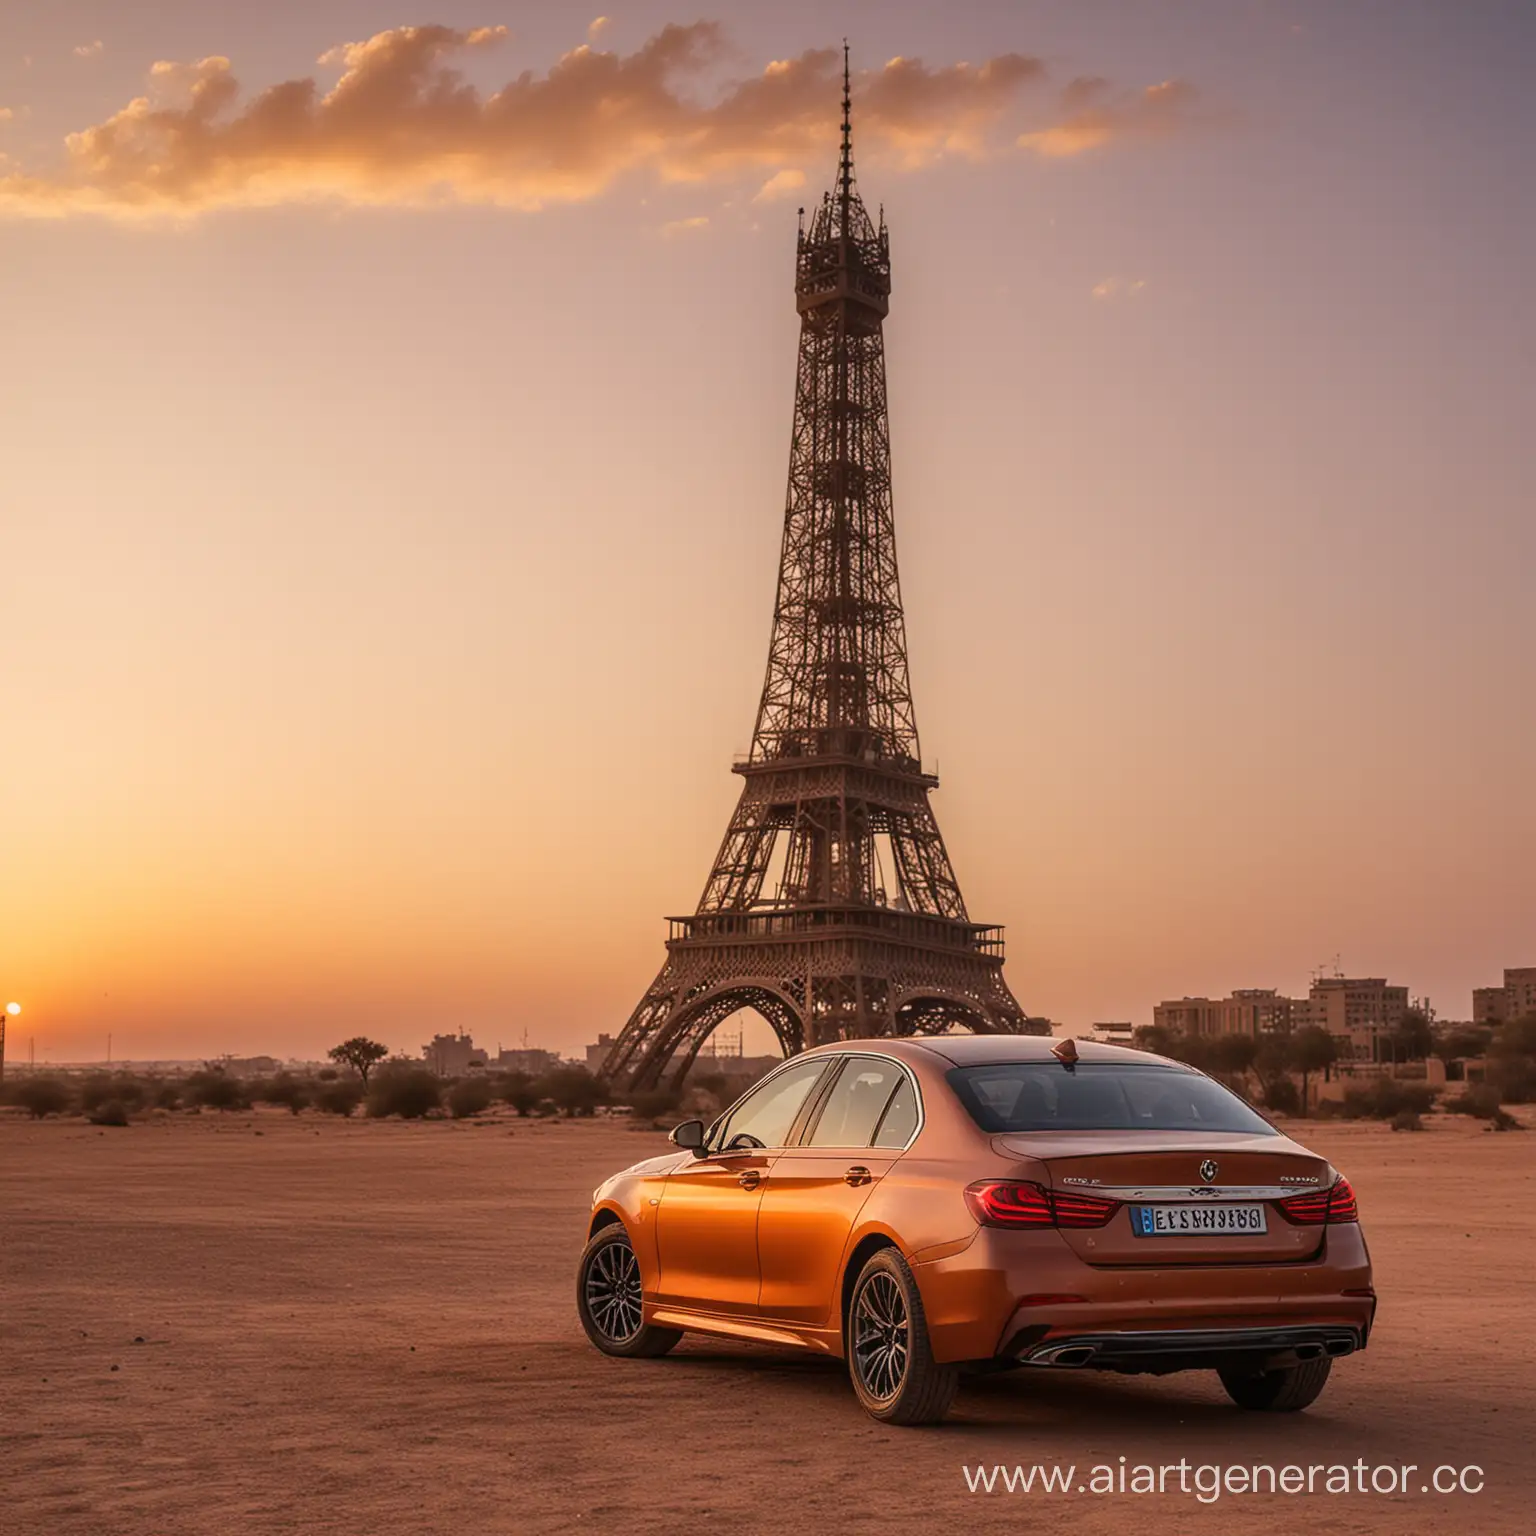 Sunset-Elvefaya-Tower-Cityscape-with-Vintage-Car